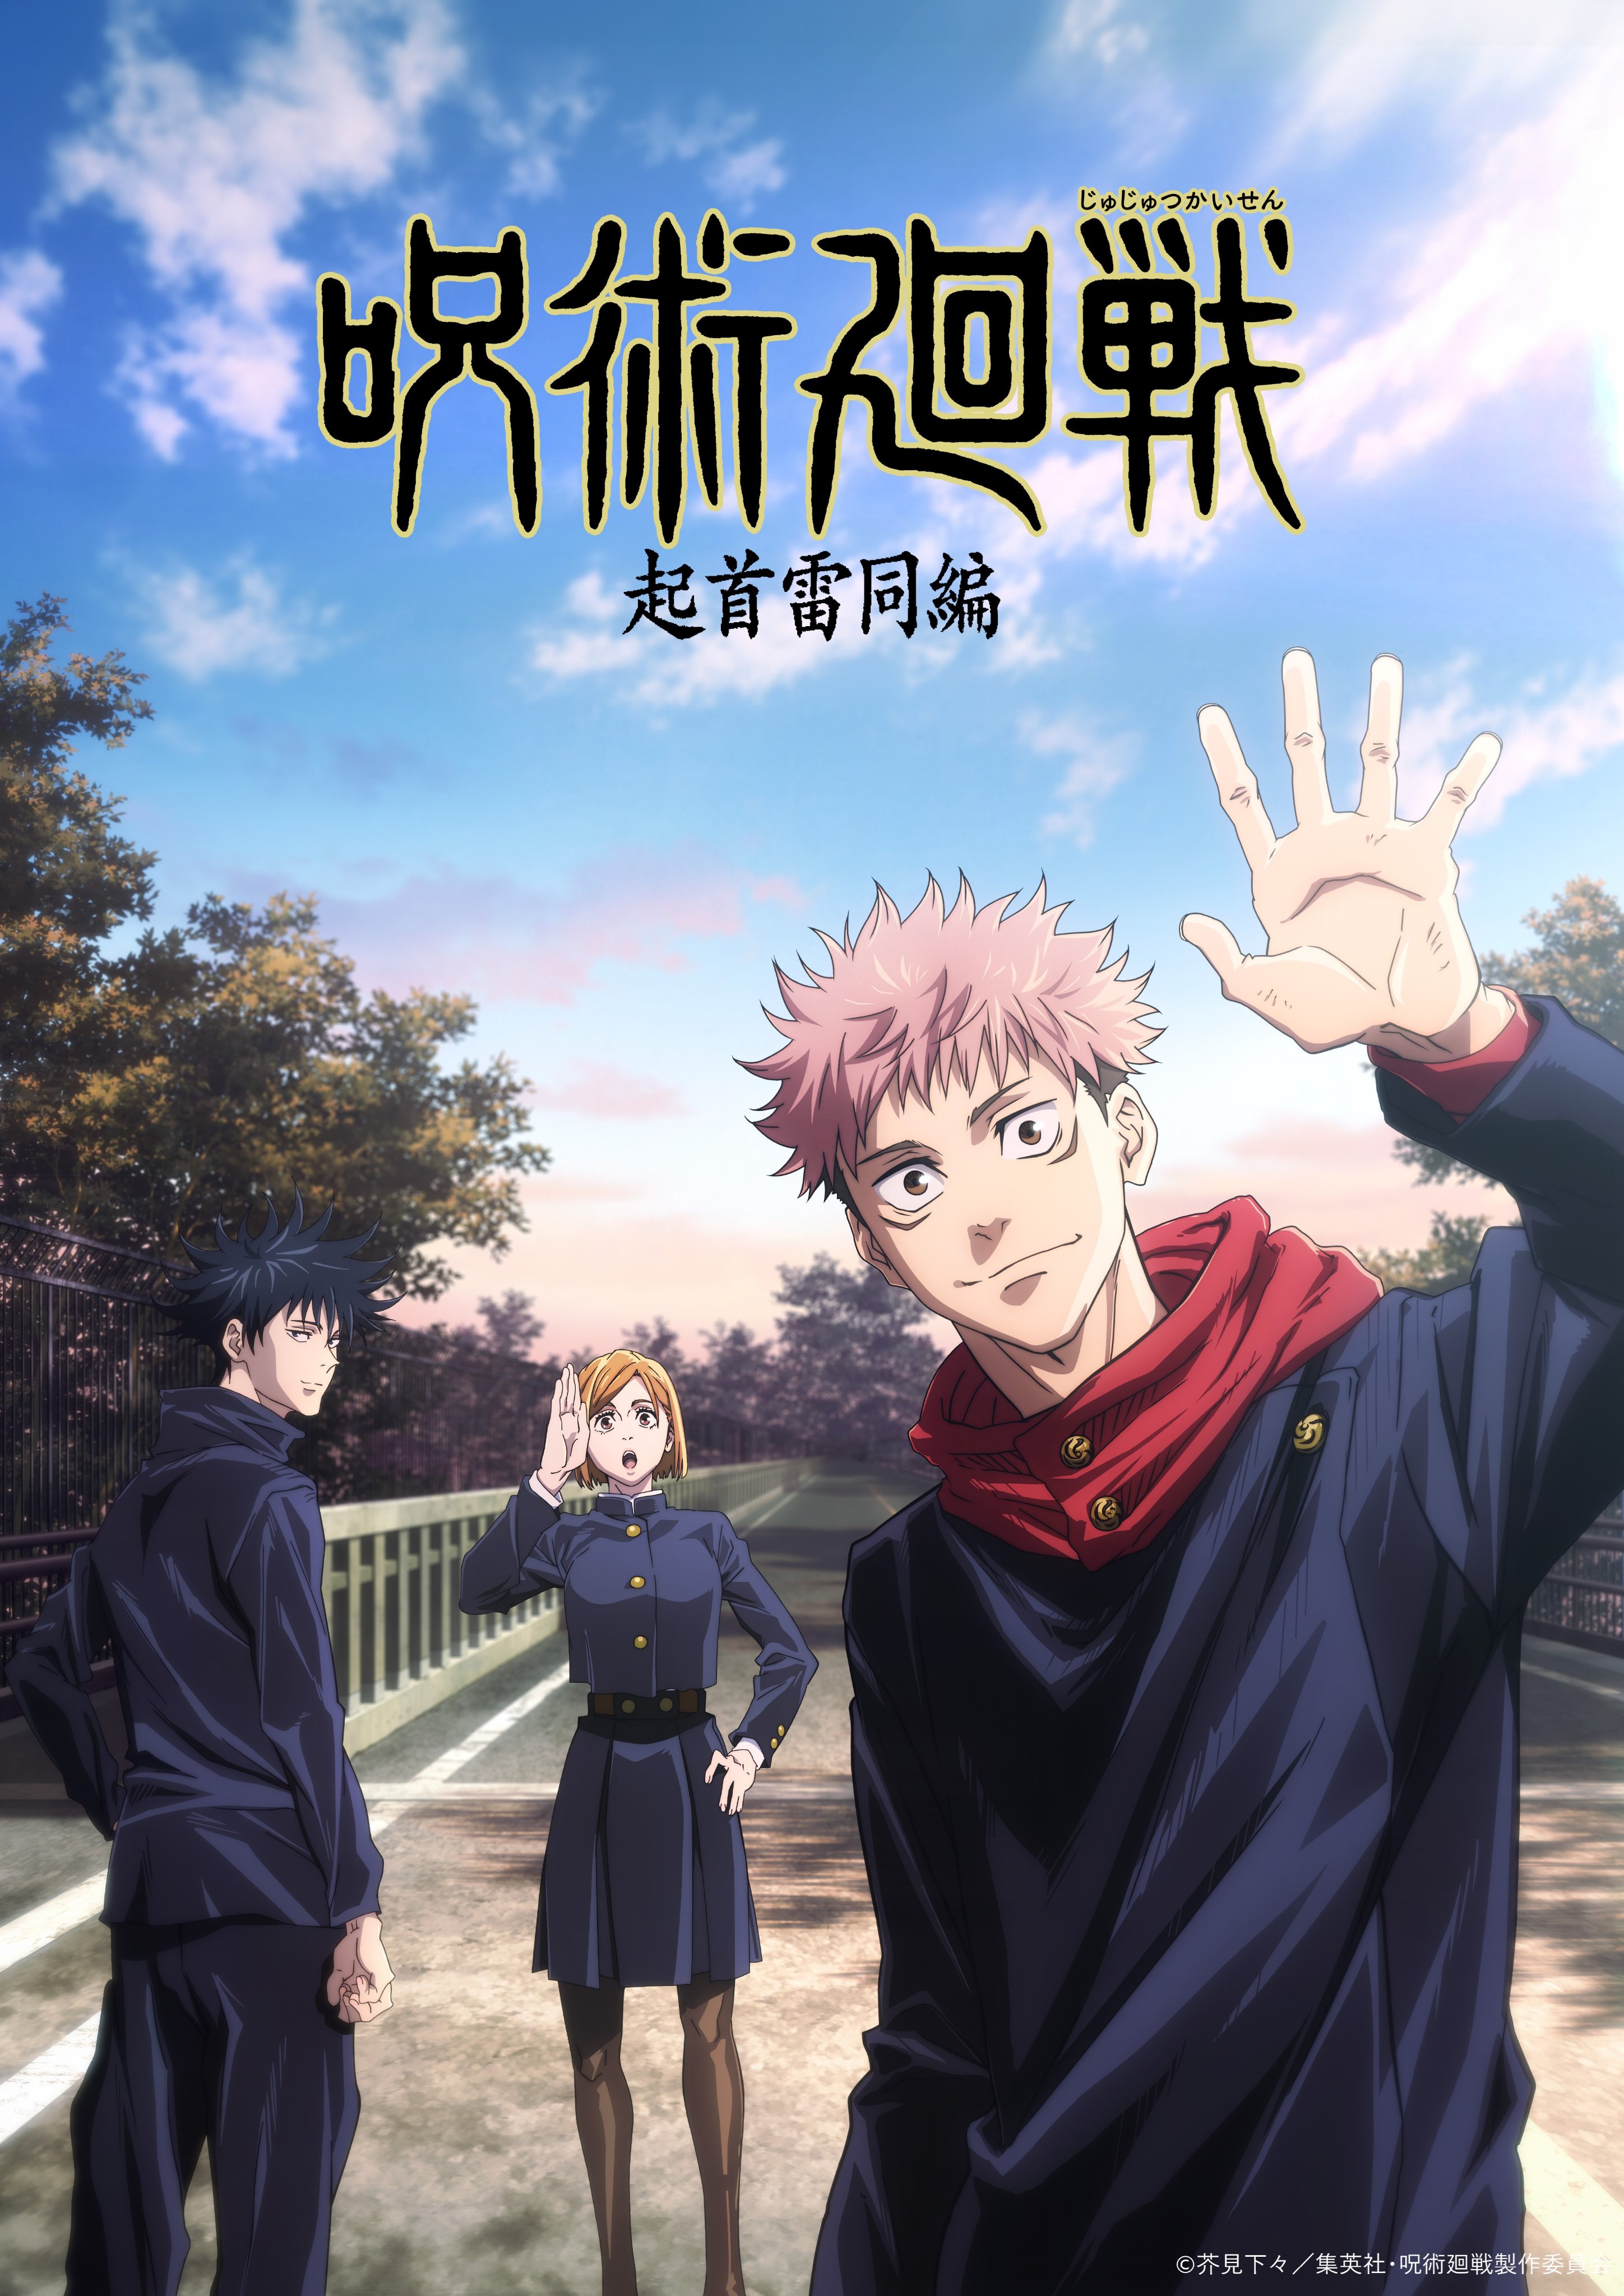 Crunchyroll - JUJUTSU KAISEN TV Anime to Get More Season 2 Information on  September 18